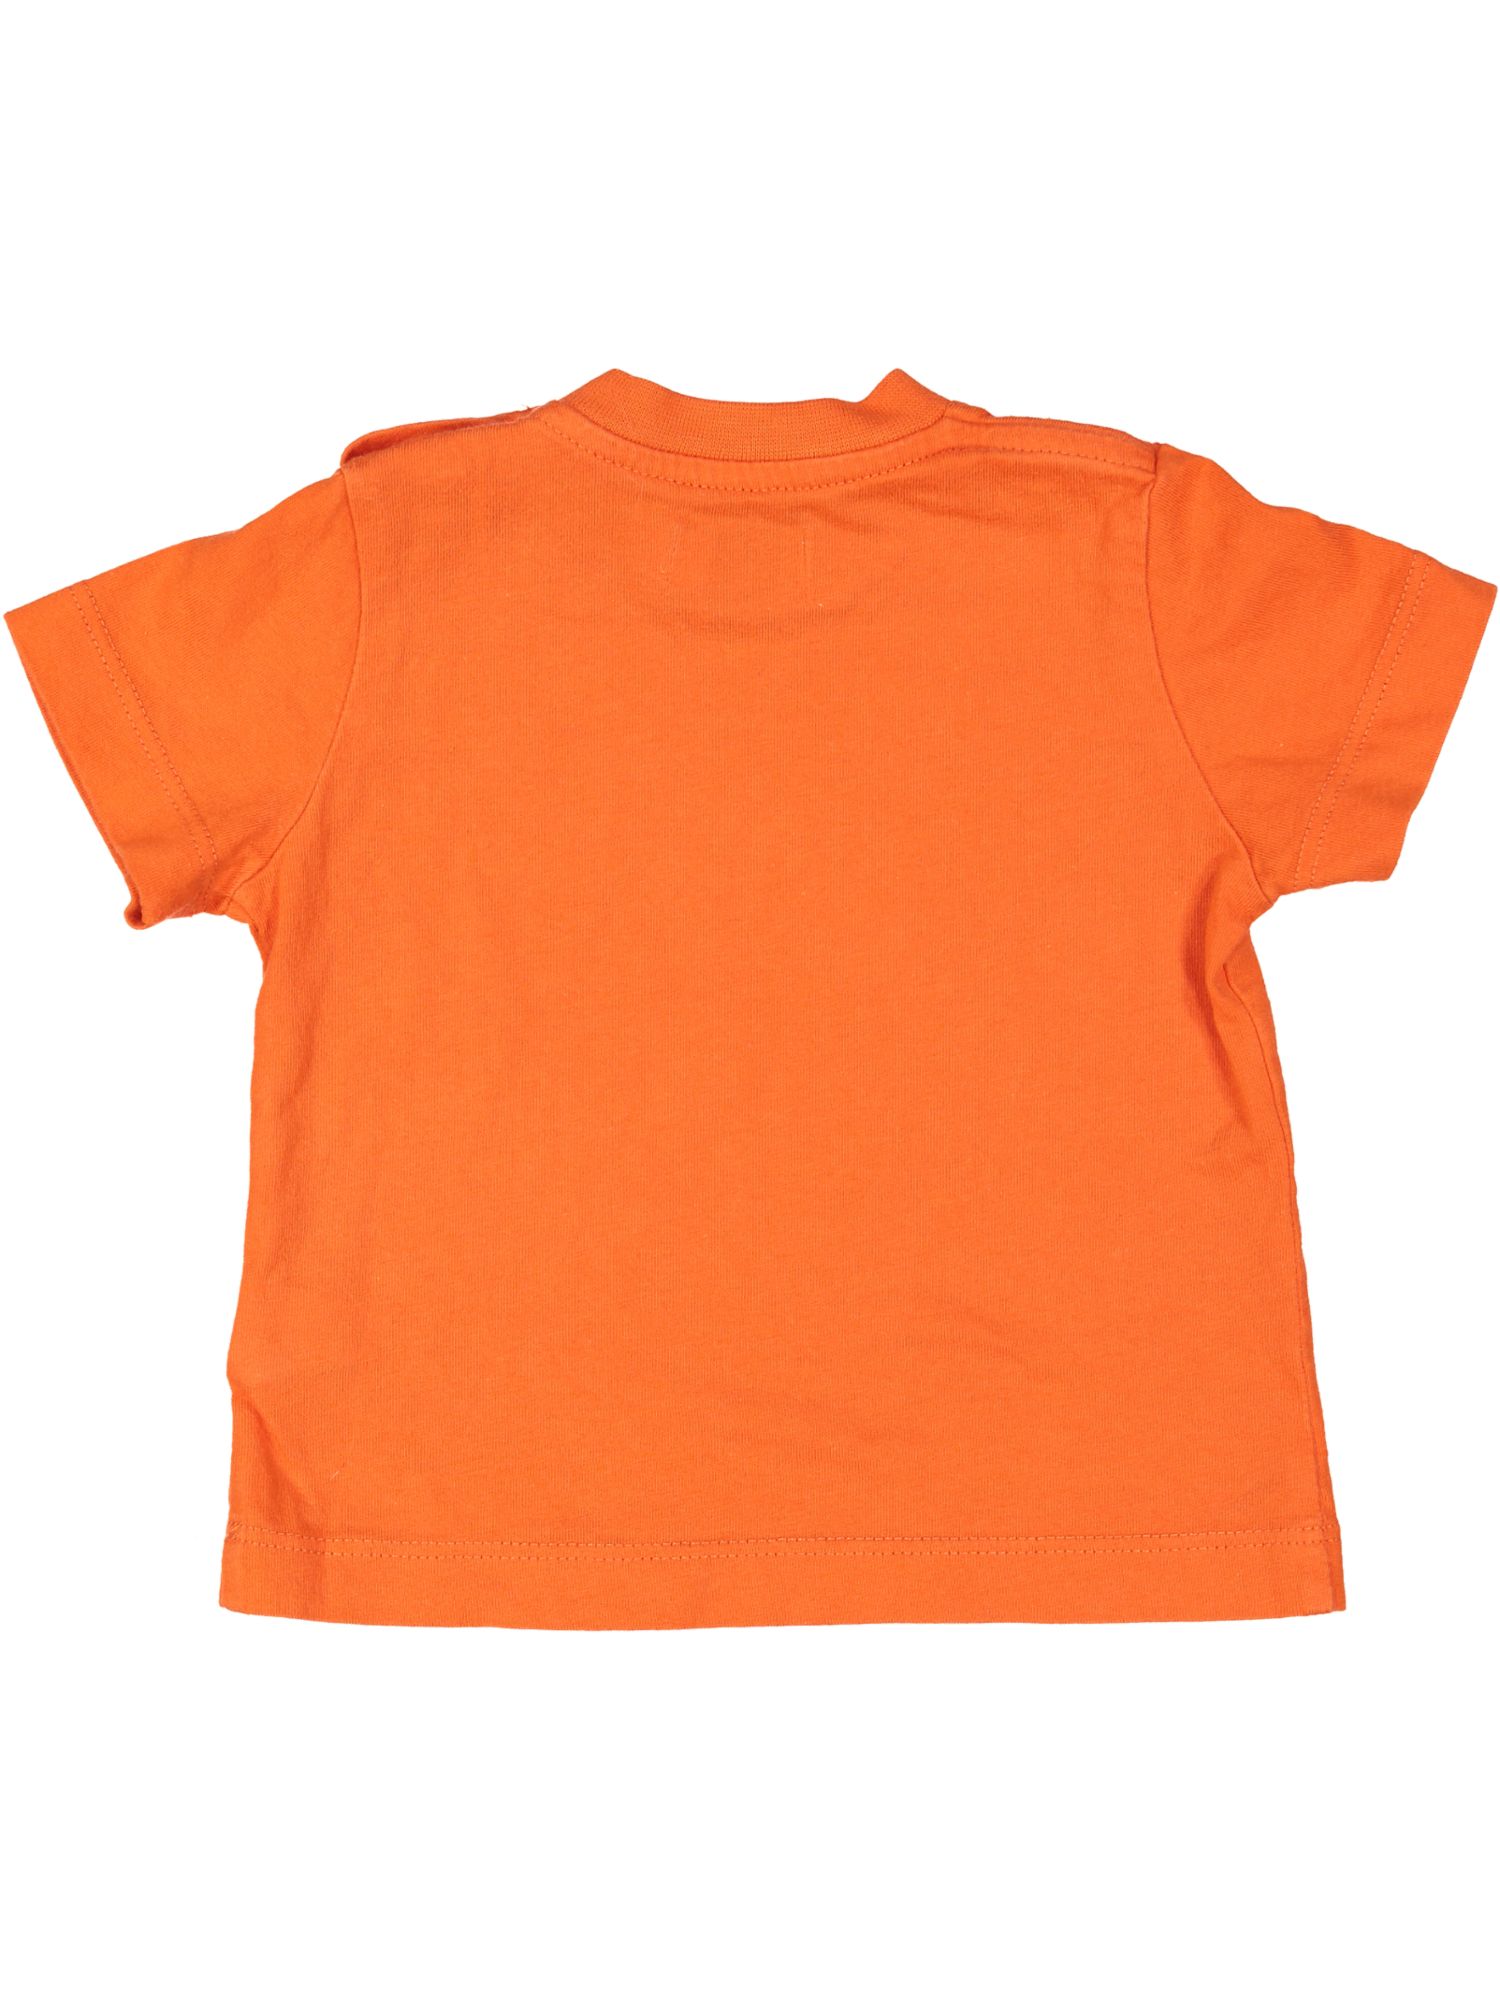 t-shirt oranje balloon dog 06m .